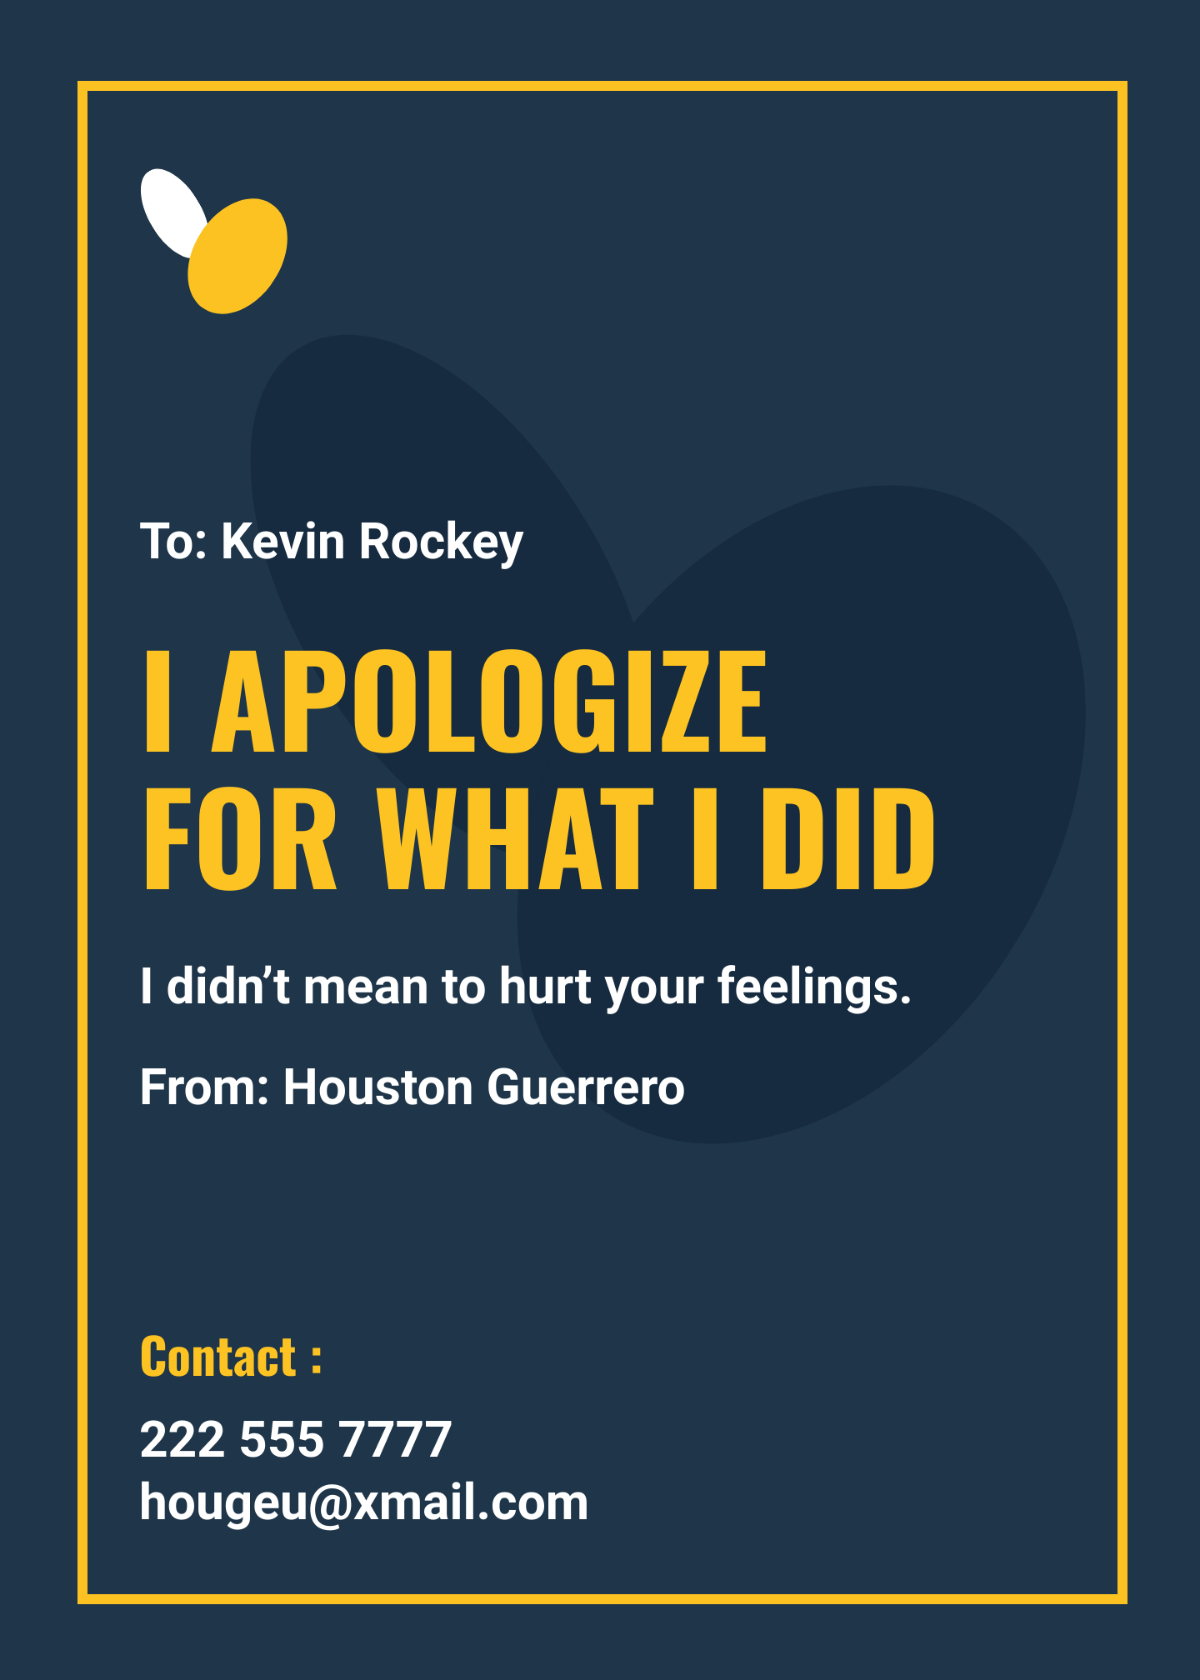 Digital Apology Card Template